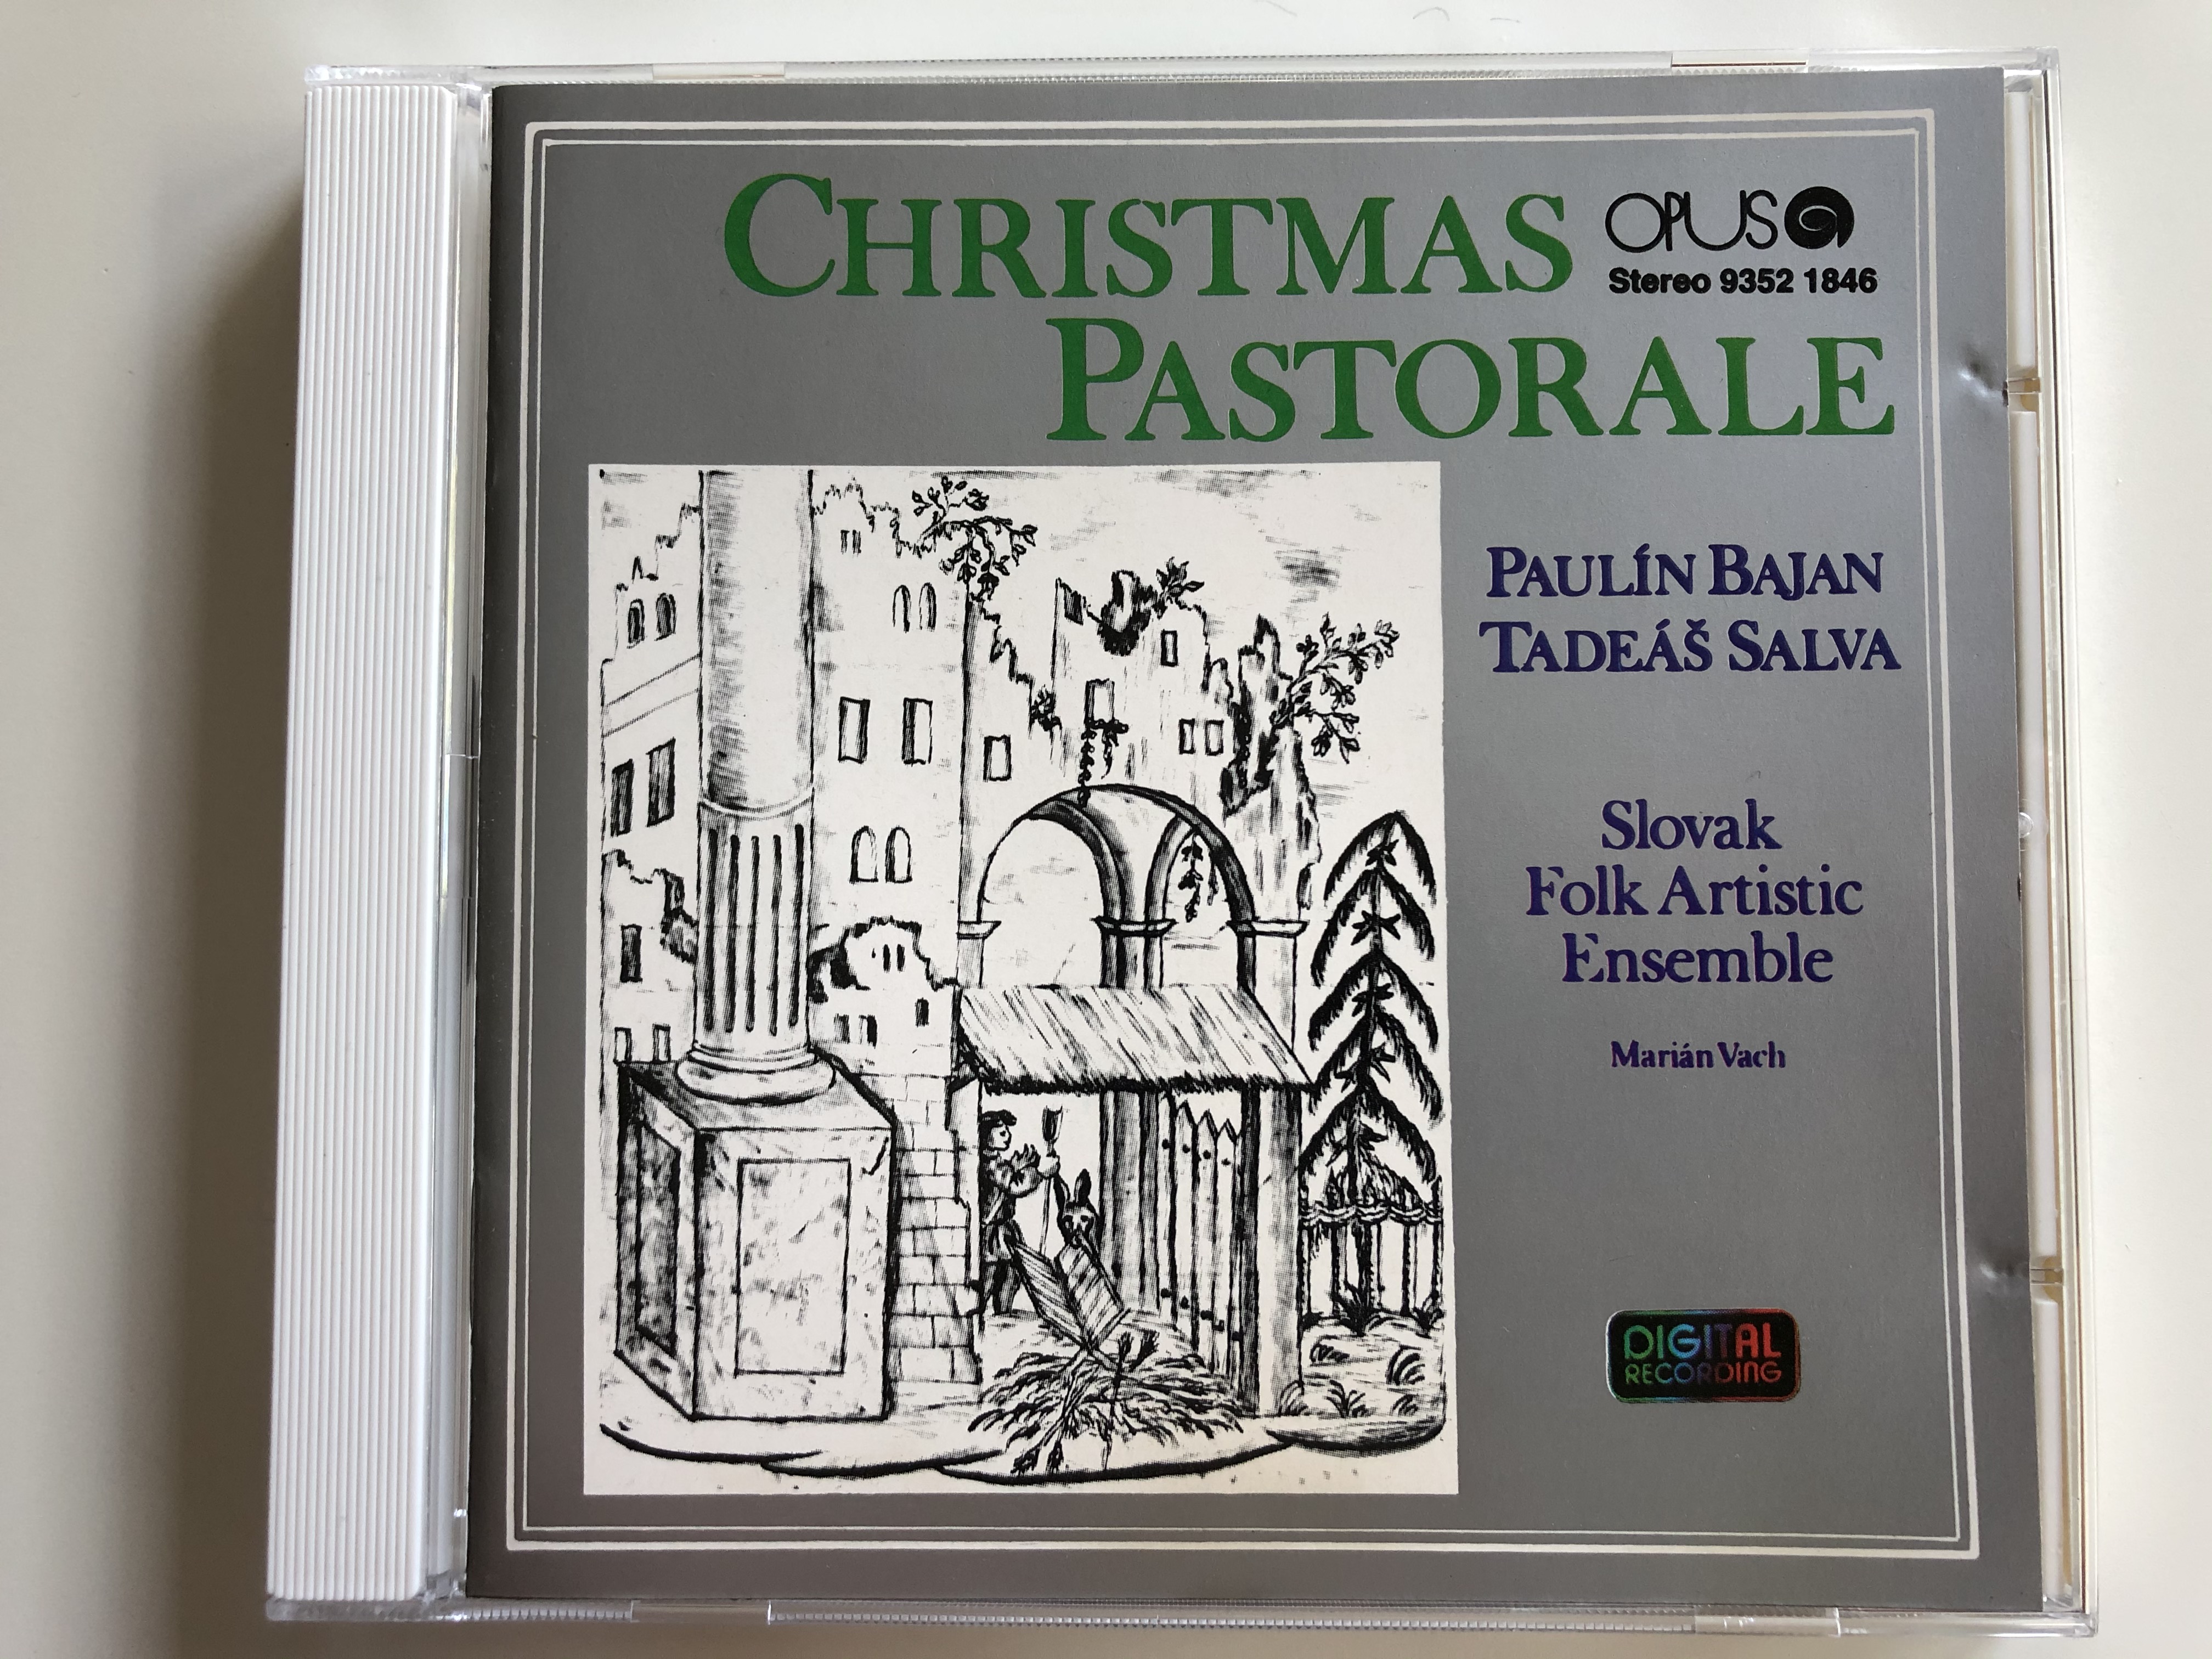 christmas-pastorale-paul-n-bajan-tade-salva-slovak-folk-artistic-ensemble-mari-n-vach-opus-audio-cd-1988-stereo-9352-1846-1-.jpg